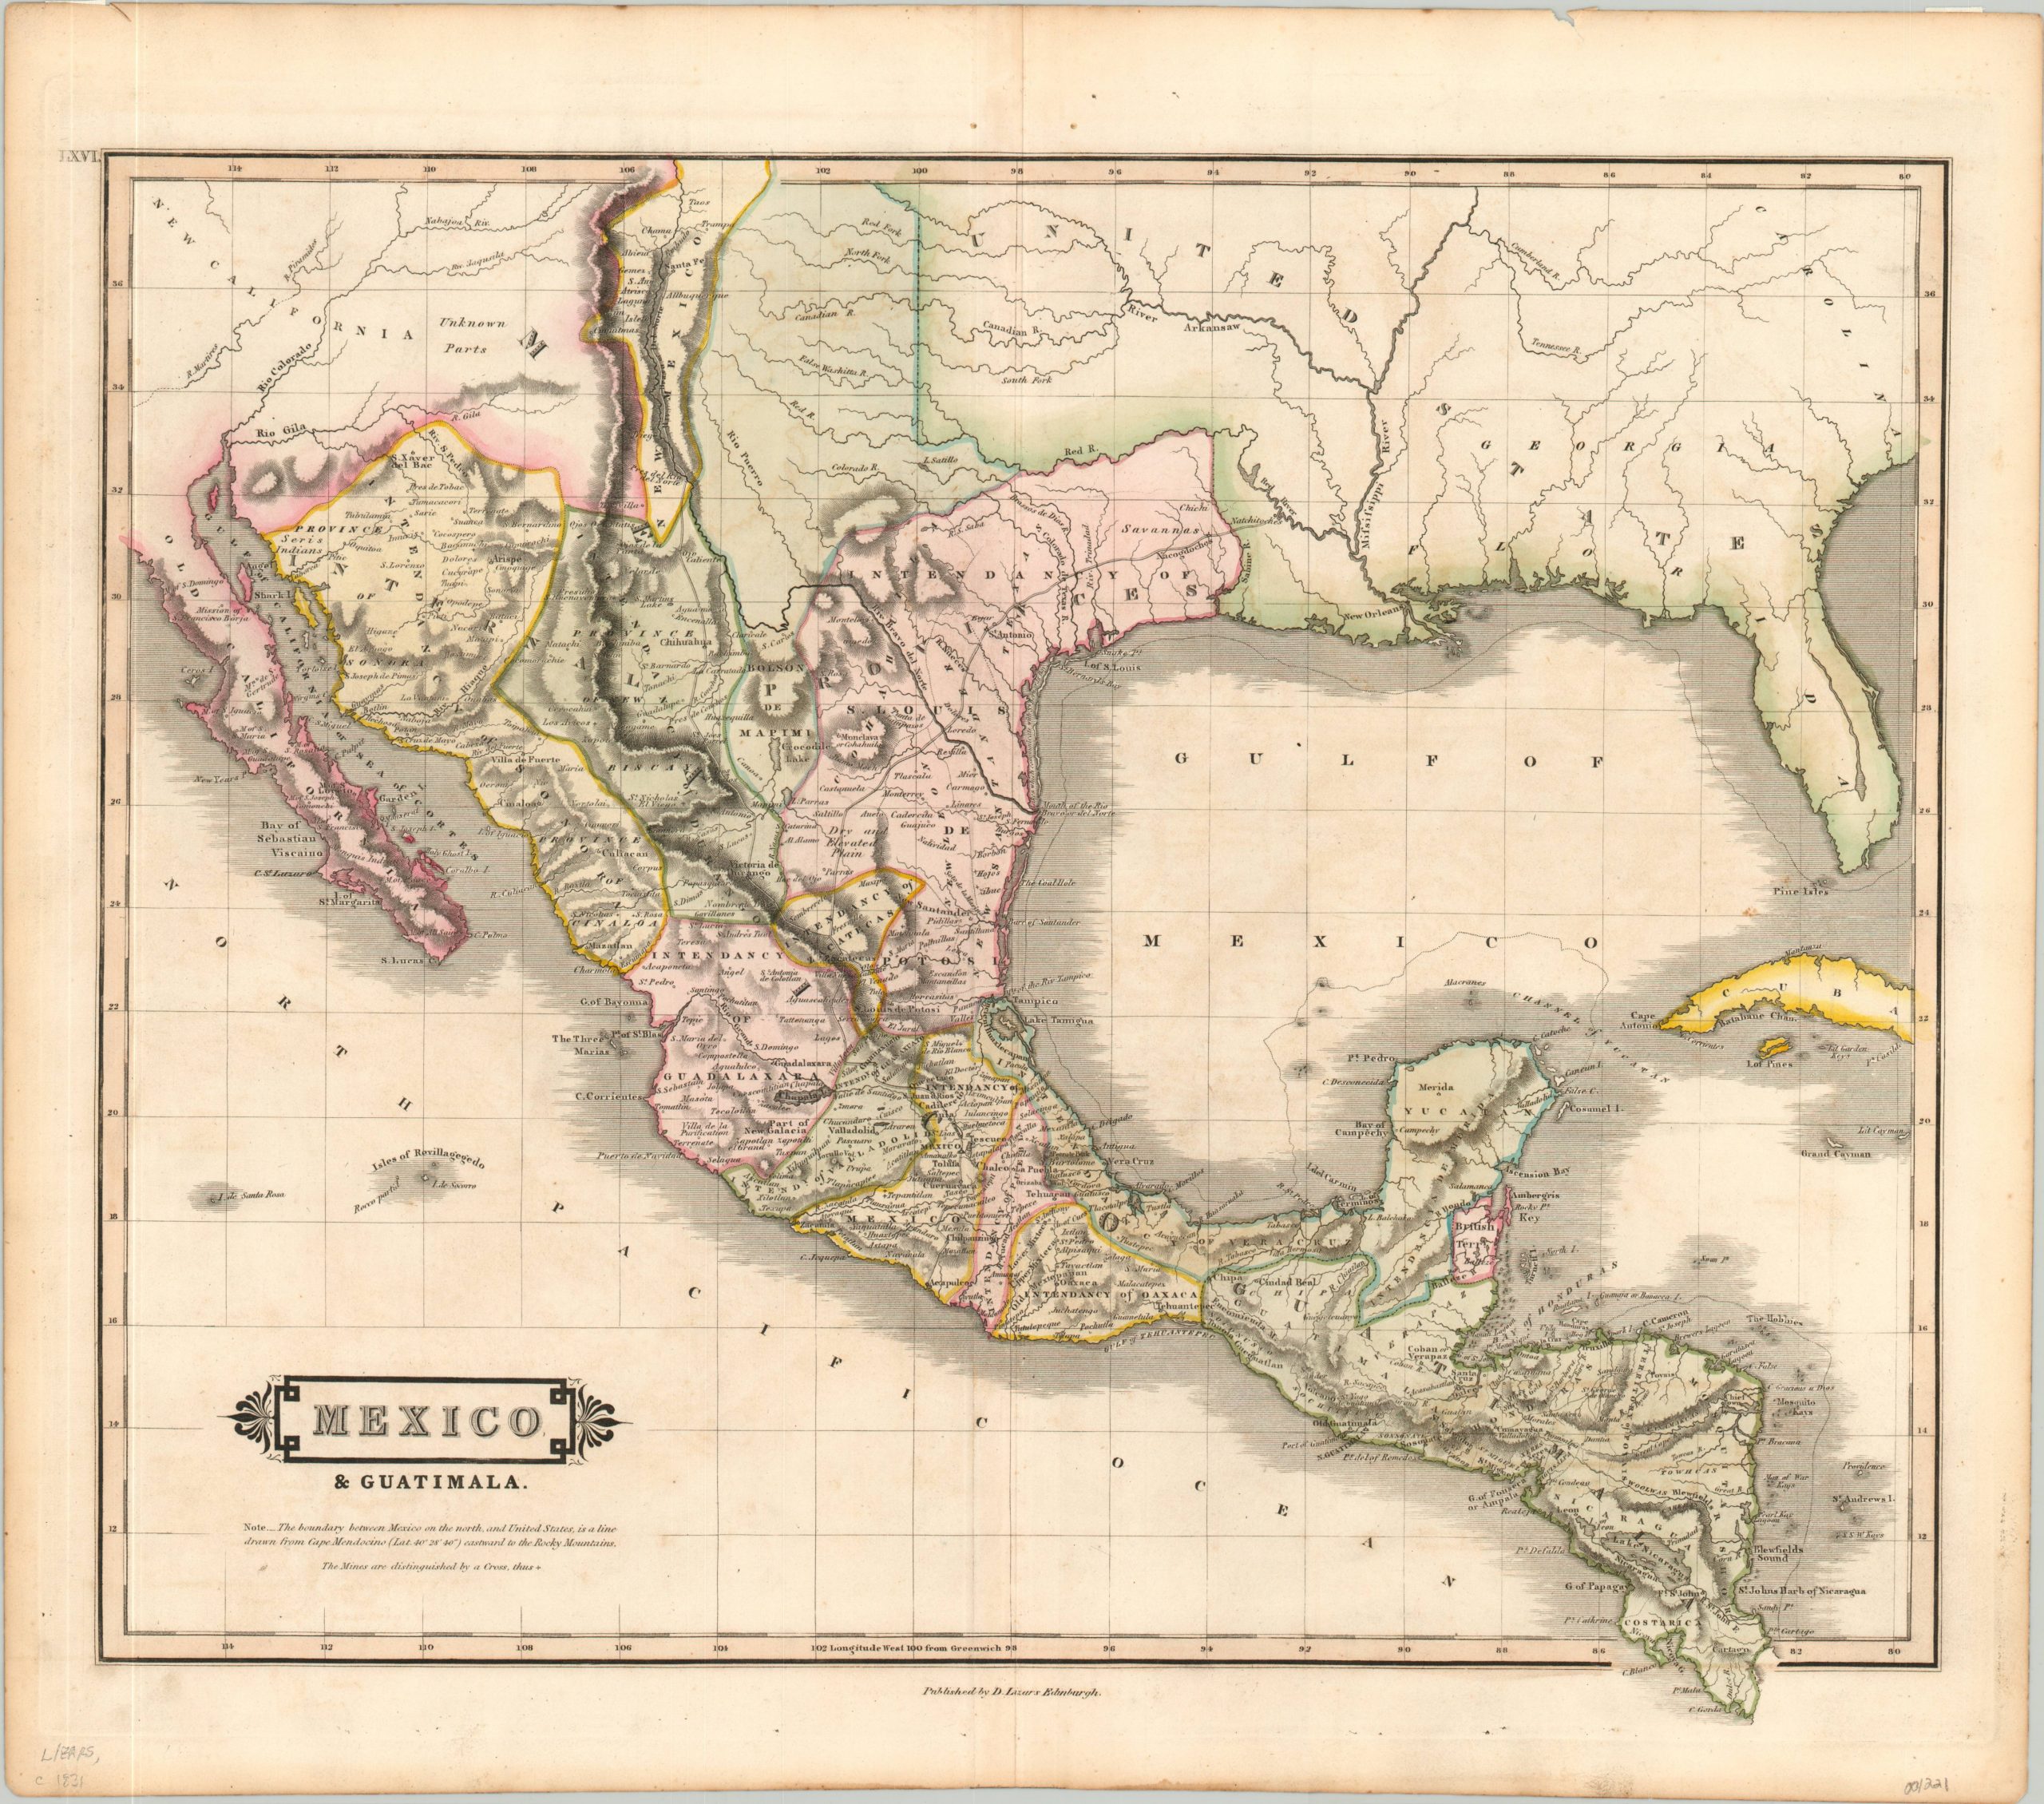 Mexico & Guatimala | Curtis Wright Maps